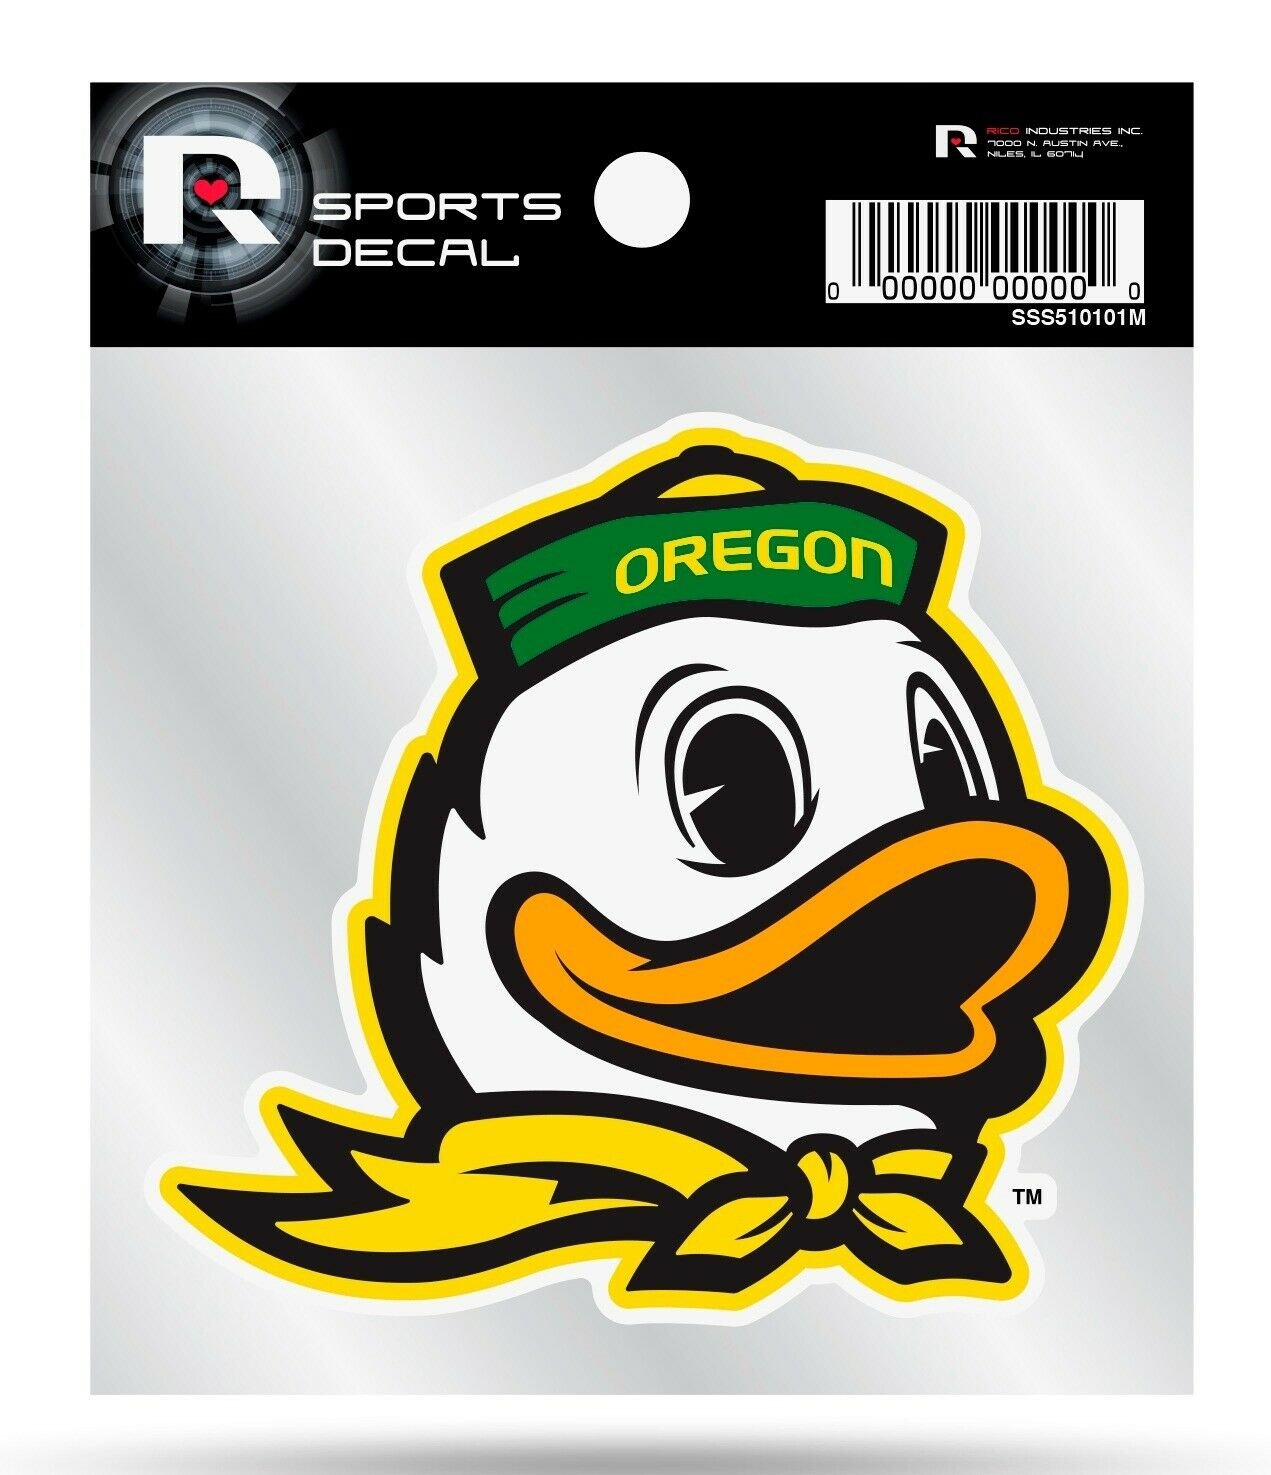 Oregon Ducks 4x4 Decal Sticker Mascot Logo Premium Vinyl Auto Home University of